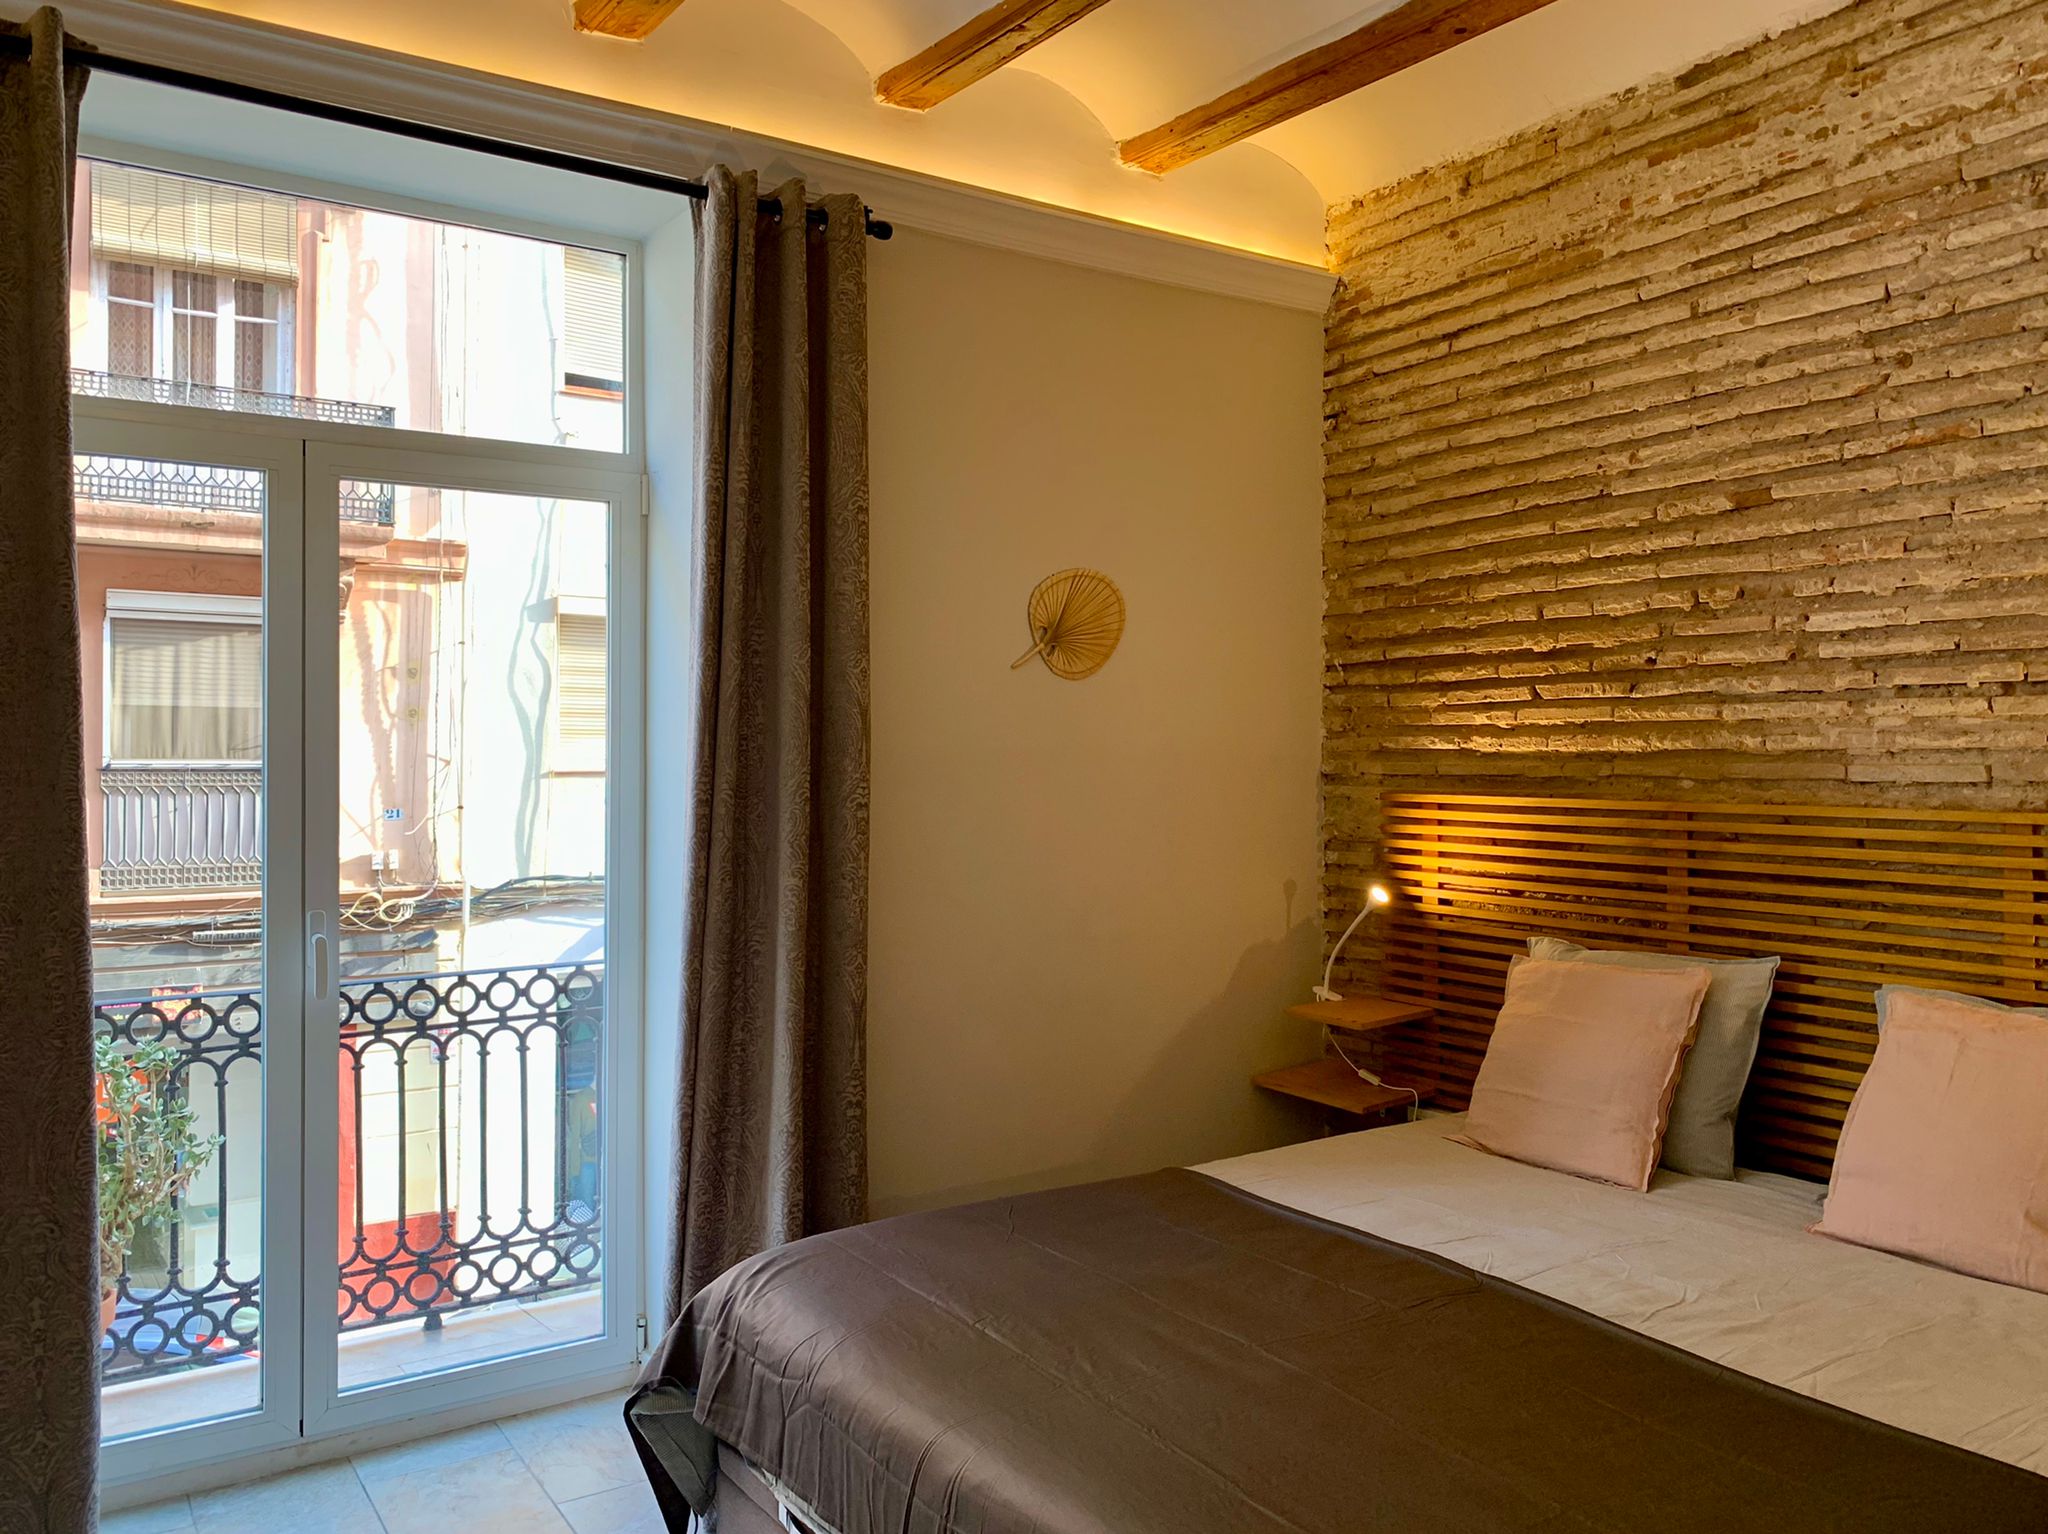 Convento - Exclusive apartment for rent in Valencia